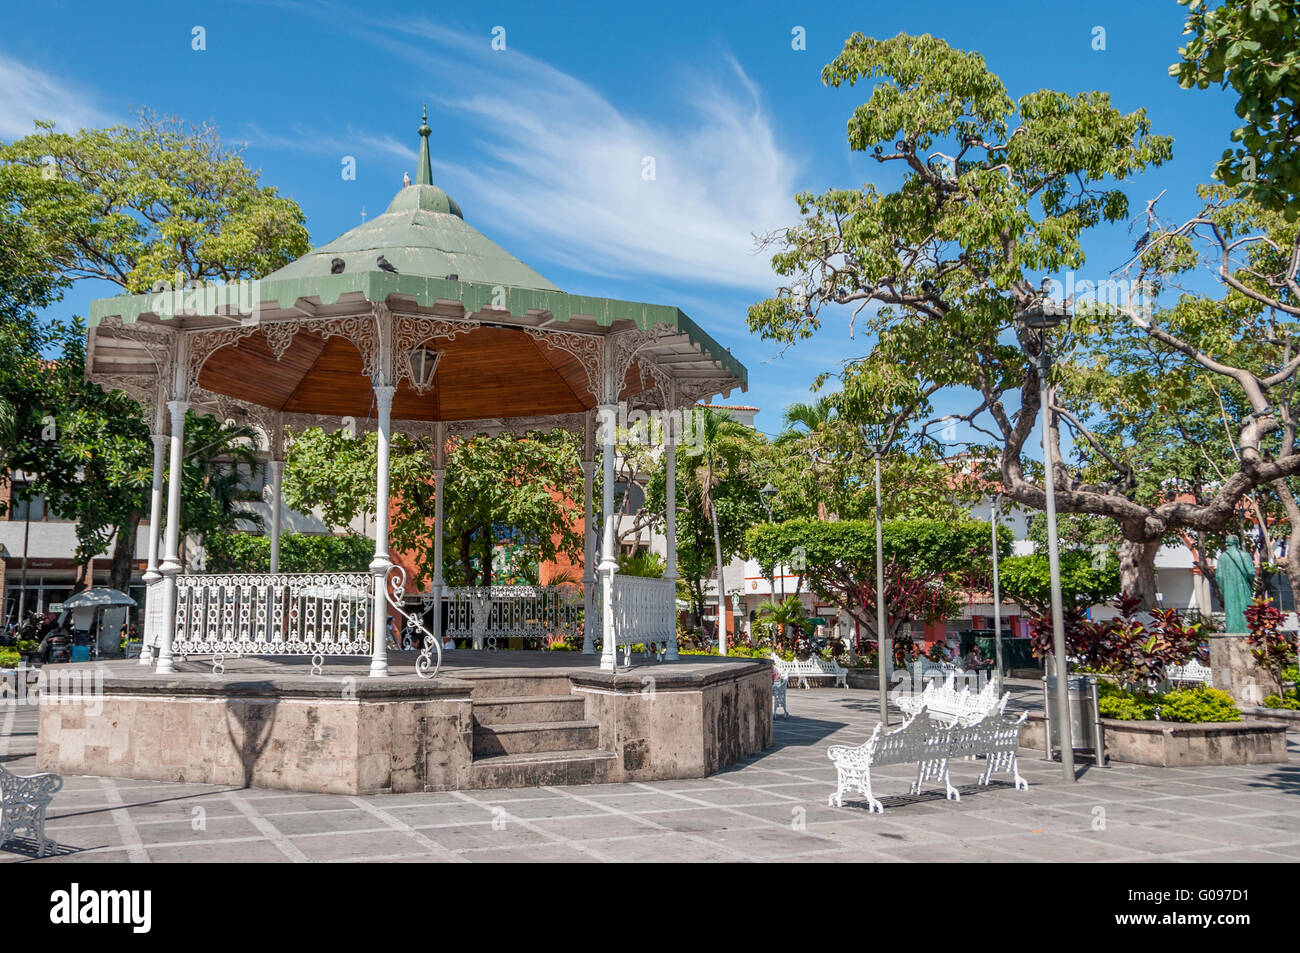 Gazebo bandstand in Plaza Principal, Old Town Puerto Vallarta, White wrought iron park benches in Zona Romantica, the town square city center. Stock Photo